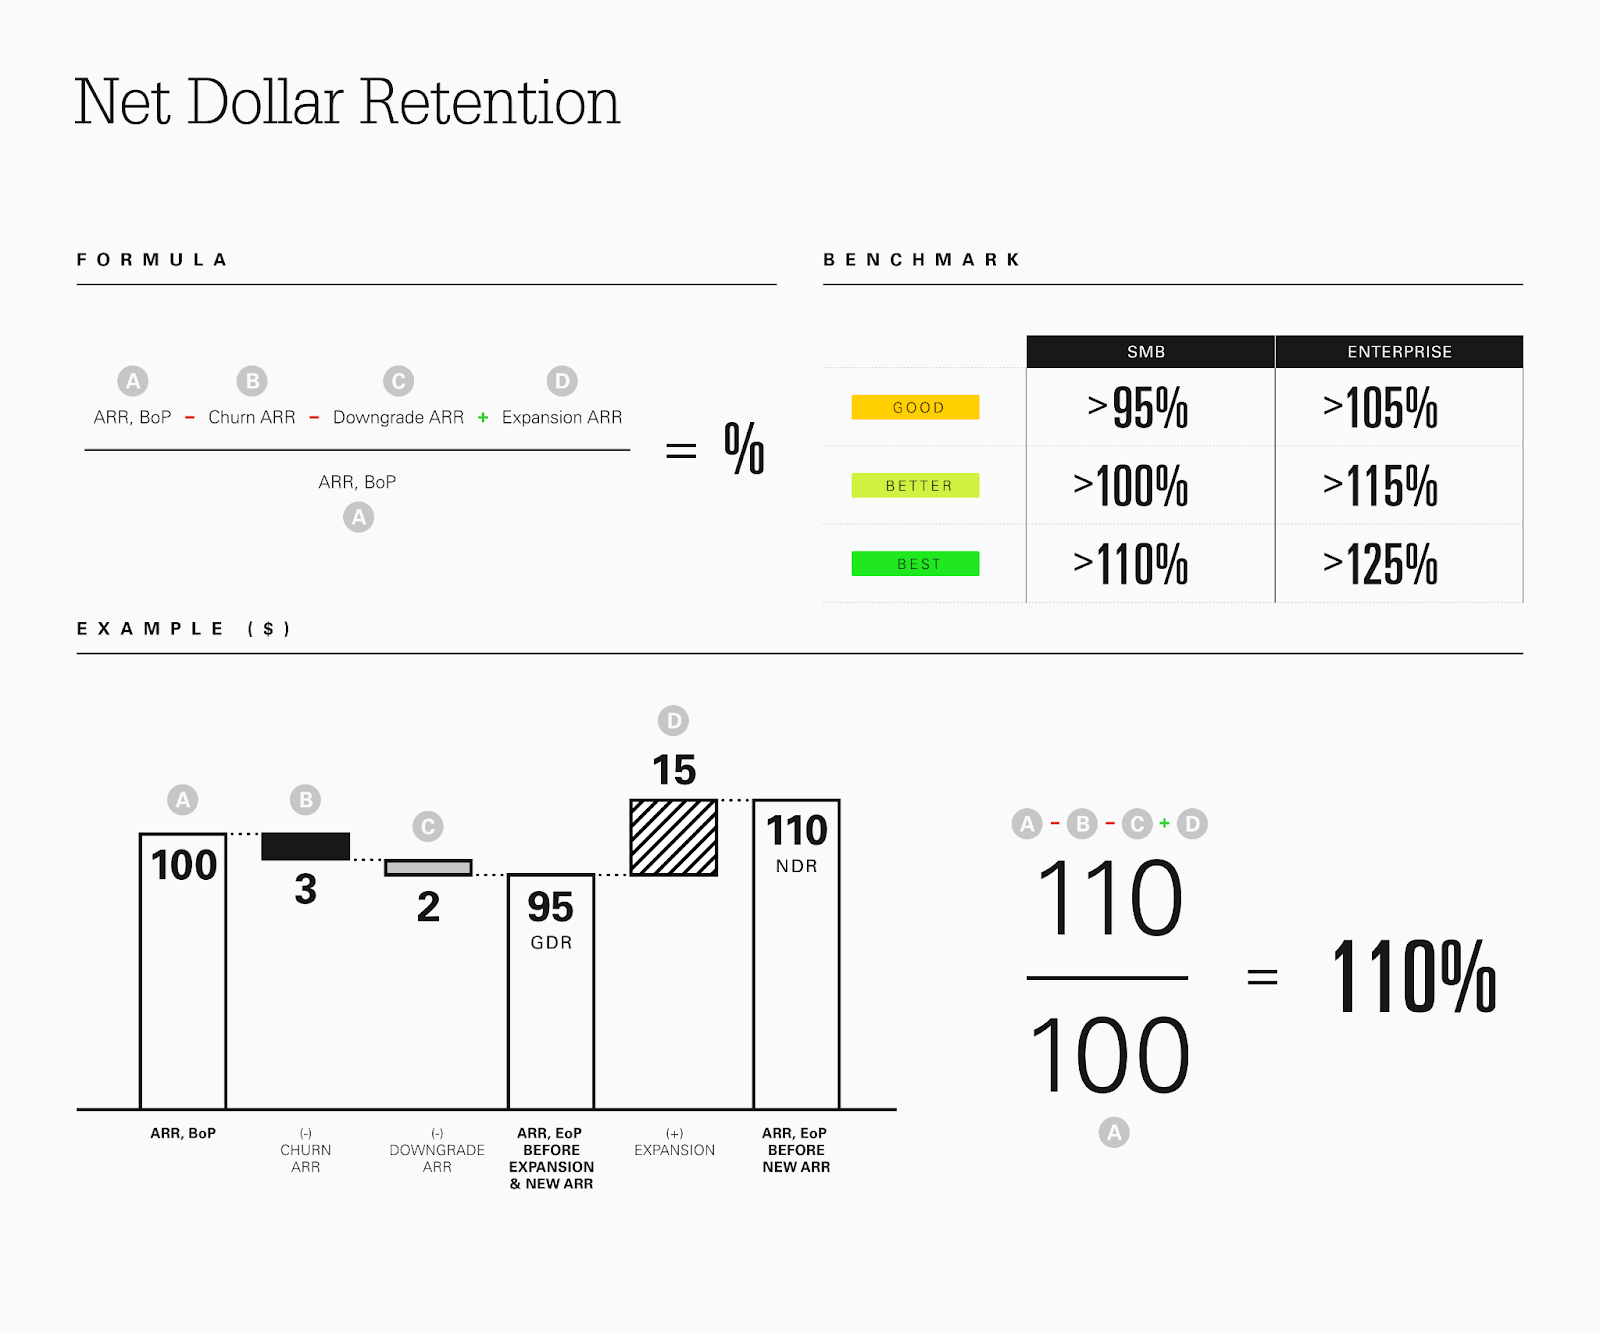 Net Dollar Retention formula and benchmark